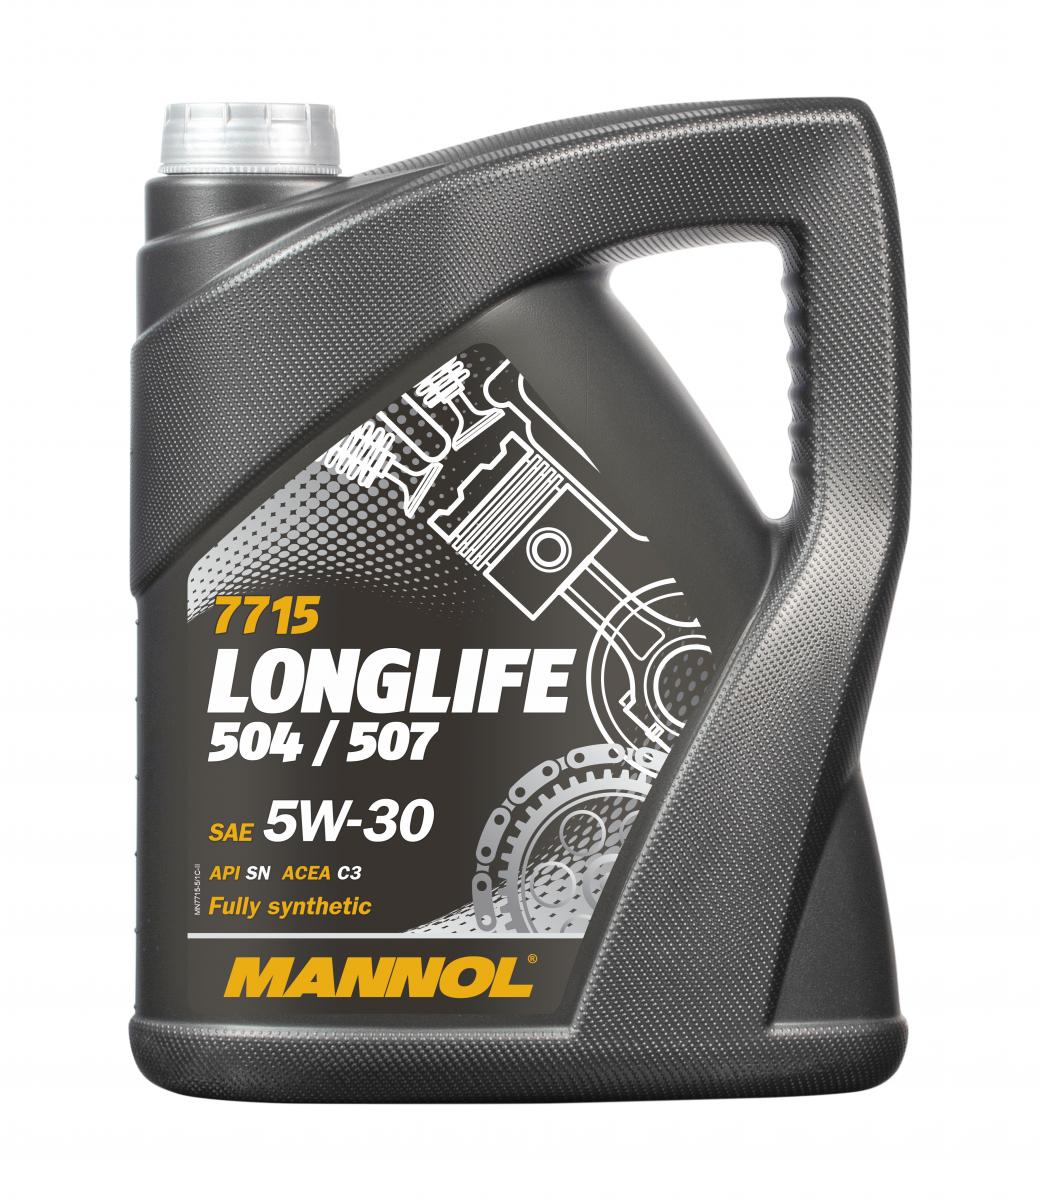 MANNOL Longlife 504/507 5W-30 Fully Synthetic Car Engine Oil 7715